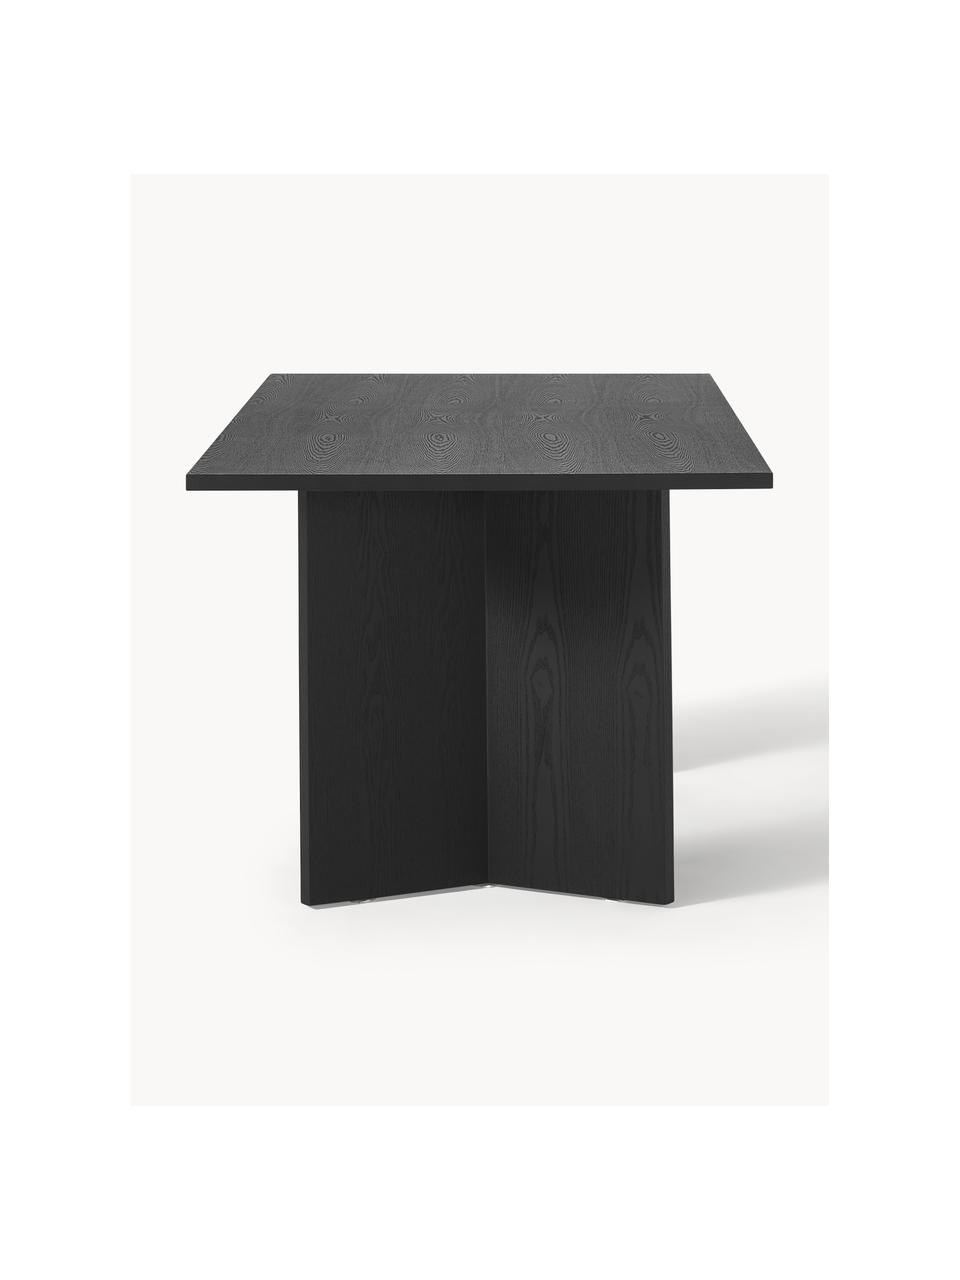 Drevený jedálenský stôl Toni, 200 x 90 cm, MDF-doska strednej hustoty s jaseňovou dyhou, lakovaná s FSC certifikátom, Jaseňové drevo, čierna lakované, D 200 x Š 90 cm